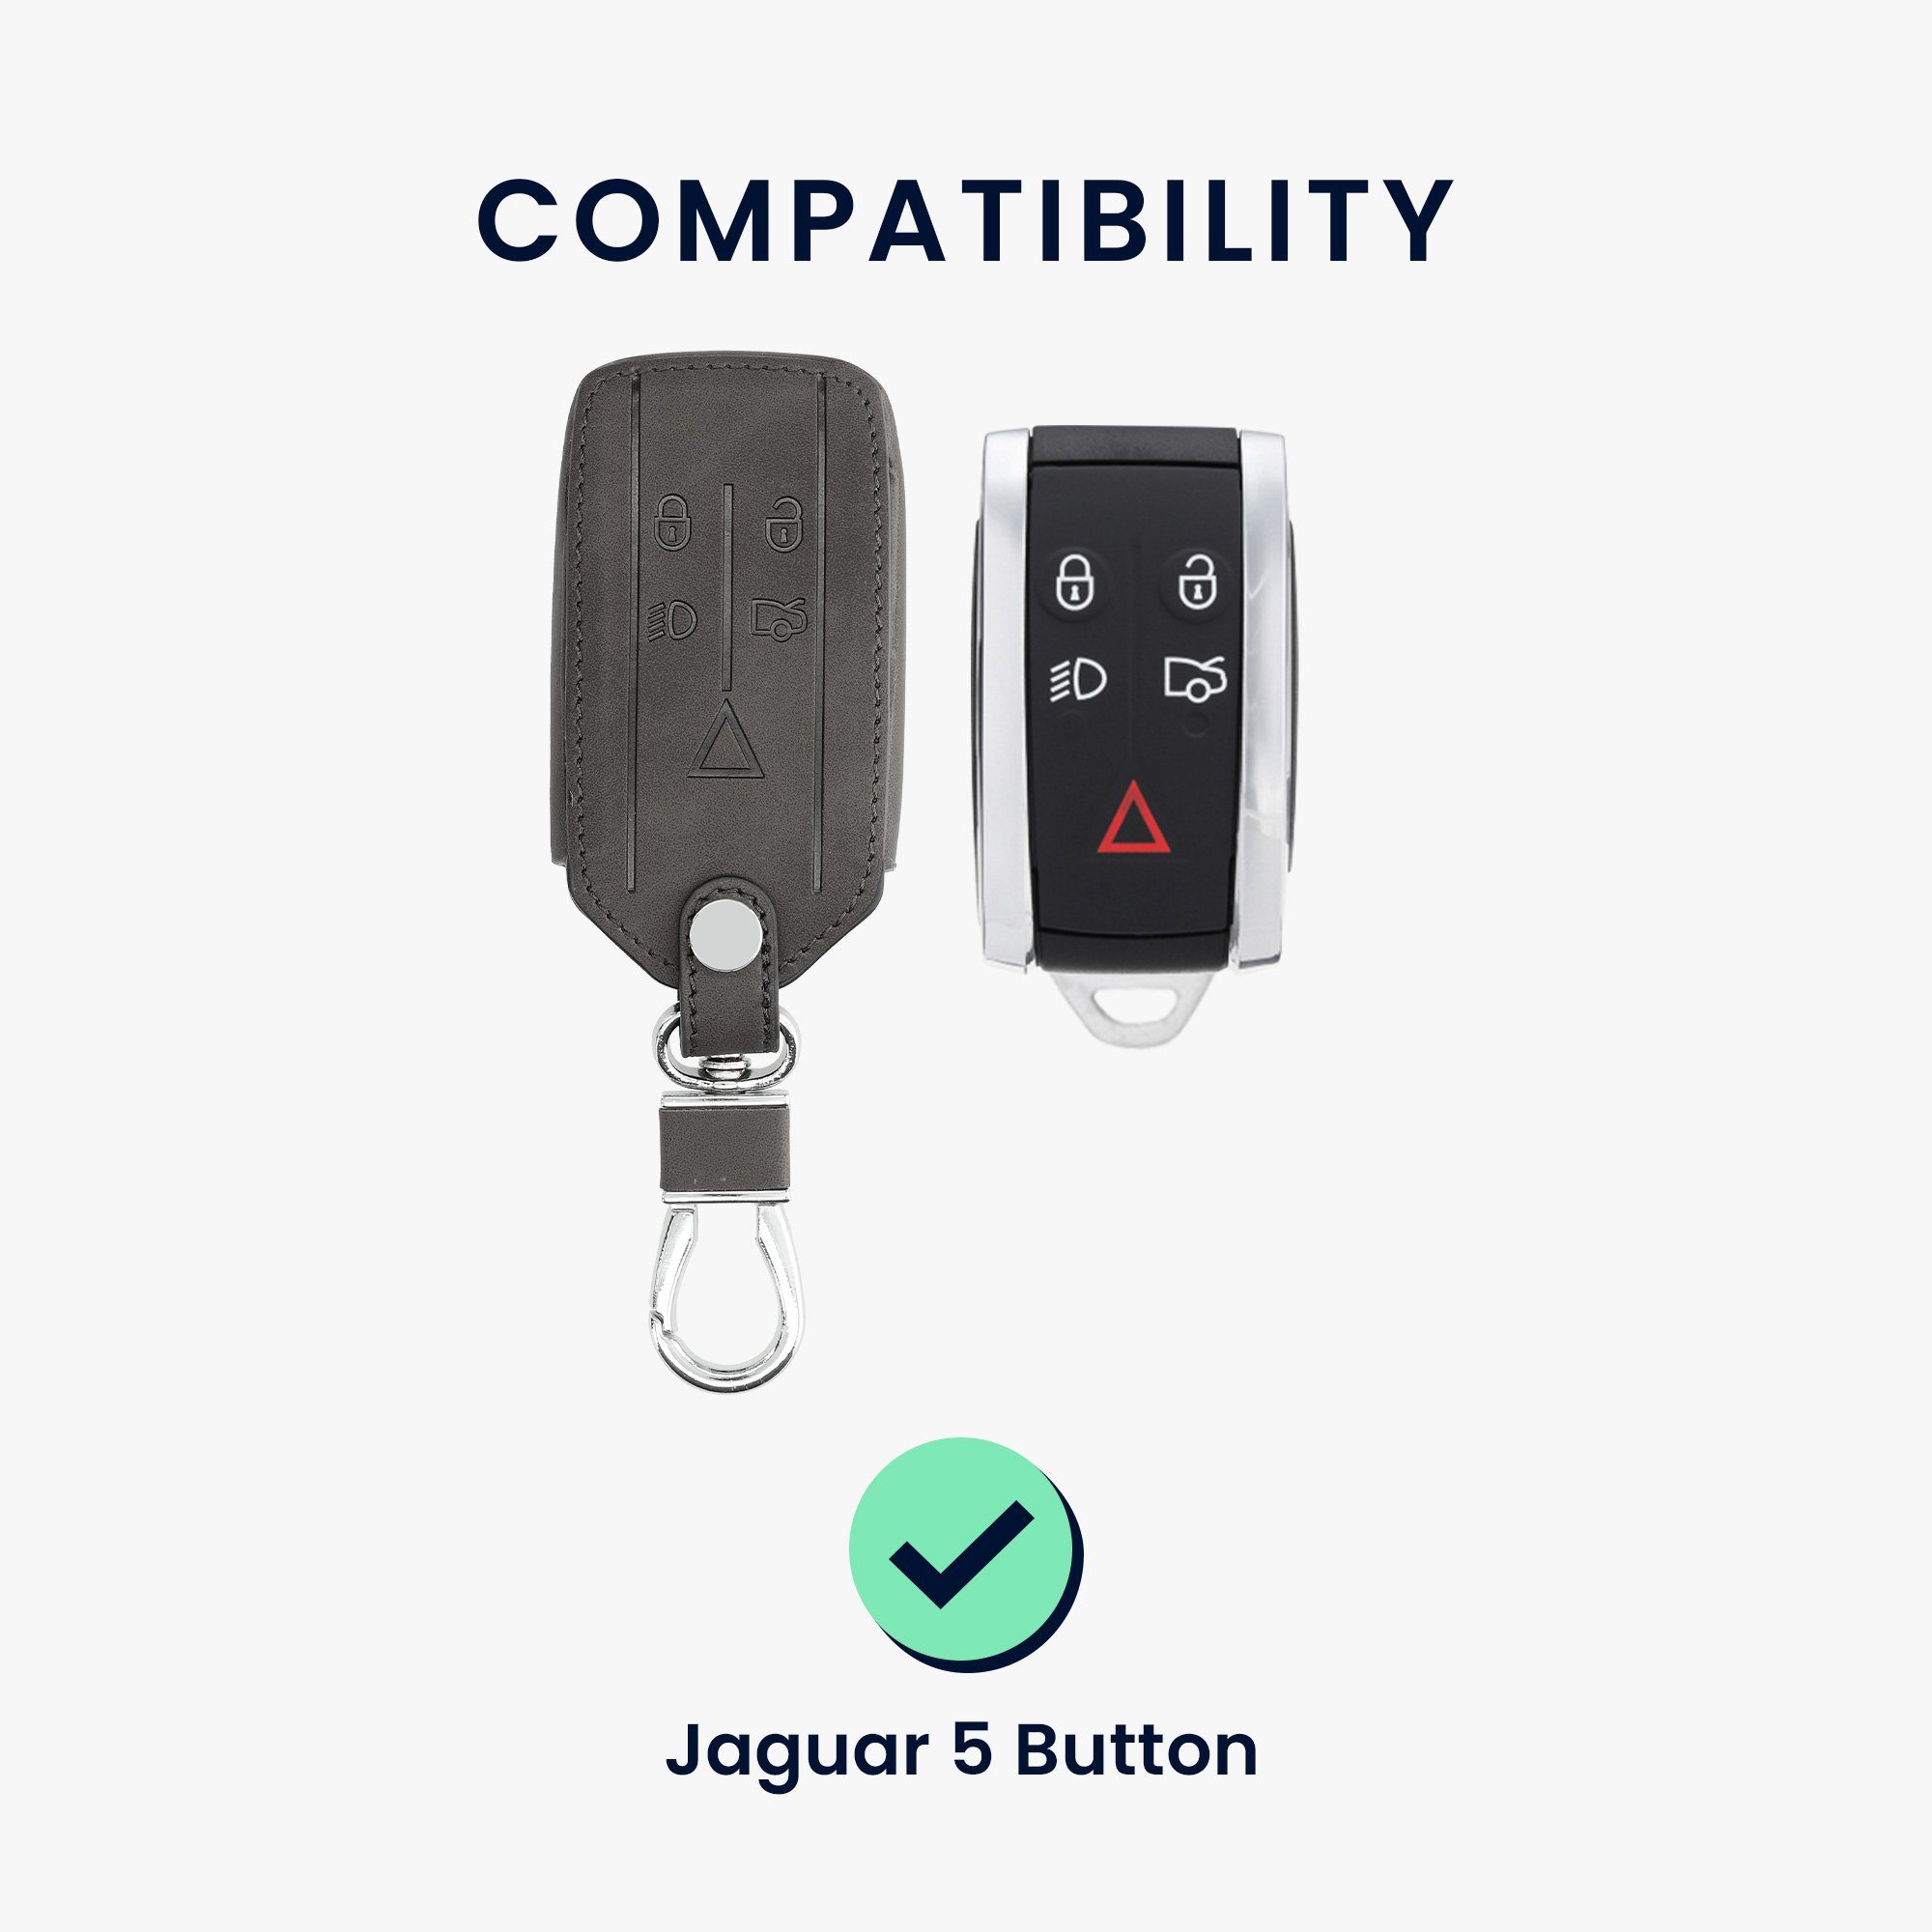 Schlüsseltasche kwmobile Cover Nubuklederoptik für Autoschlüssel Hülle Dunkelgrau Schlüsselhülle Schutzhülle Kunstleder Jaguar, -